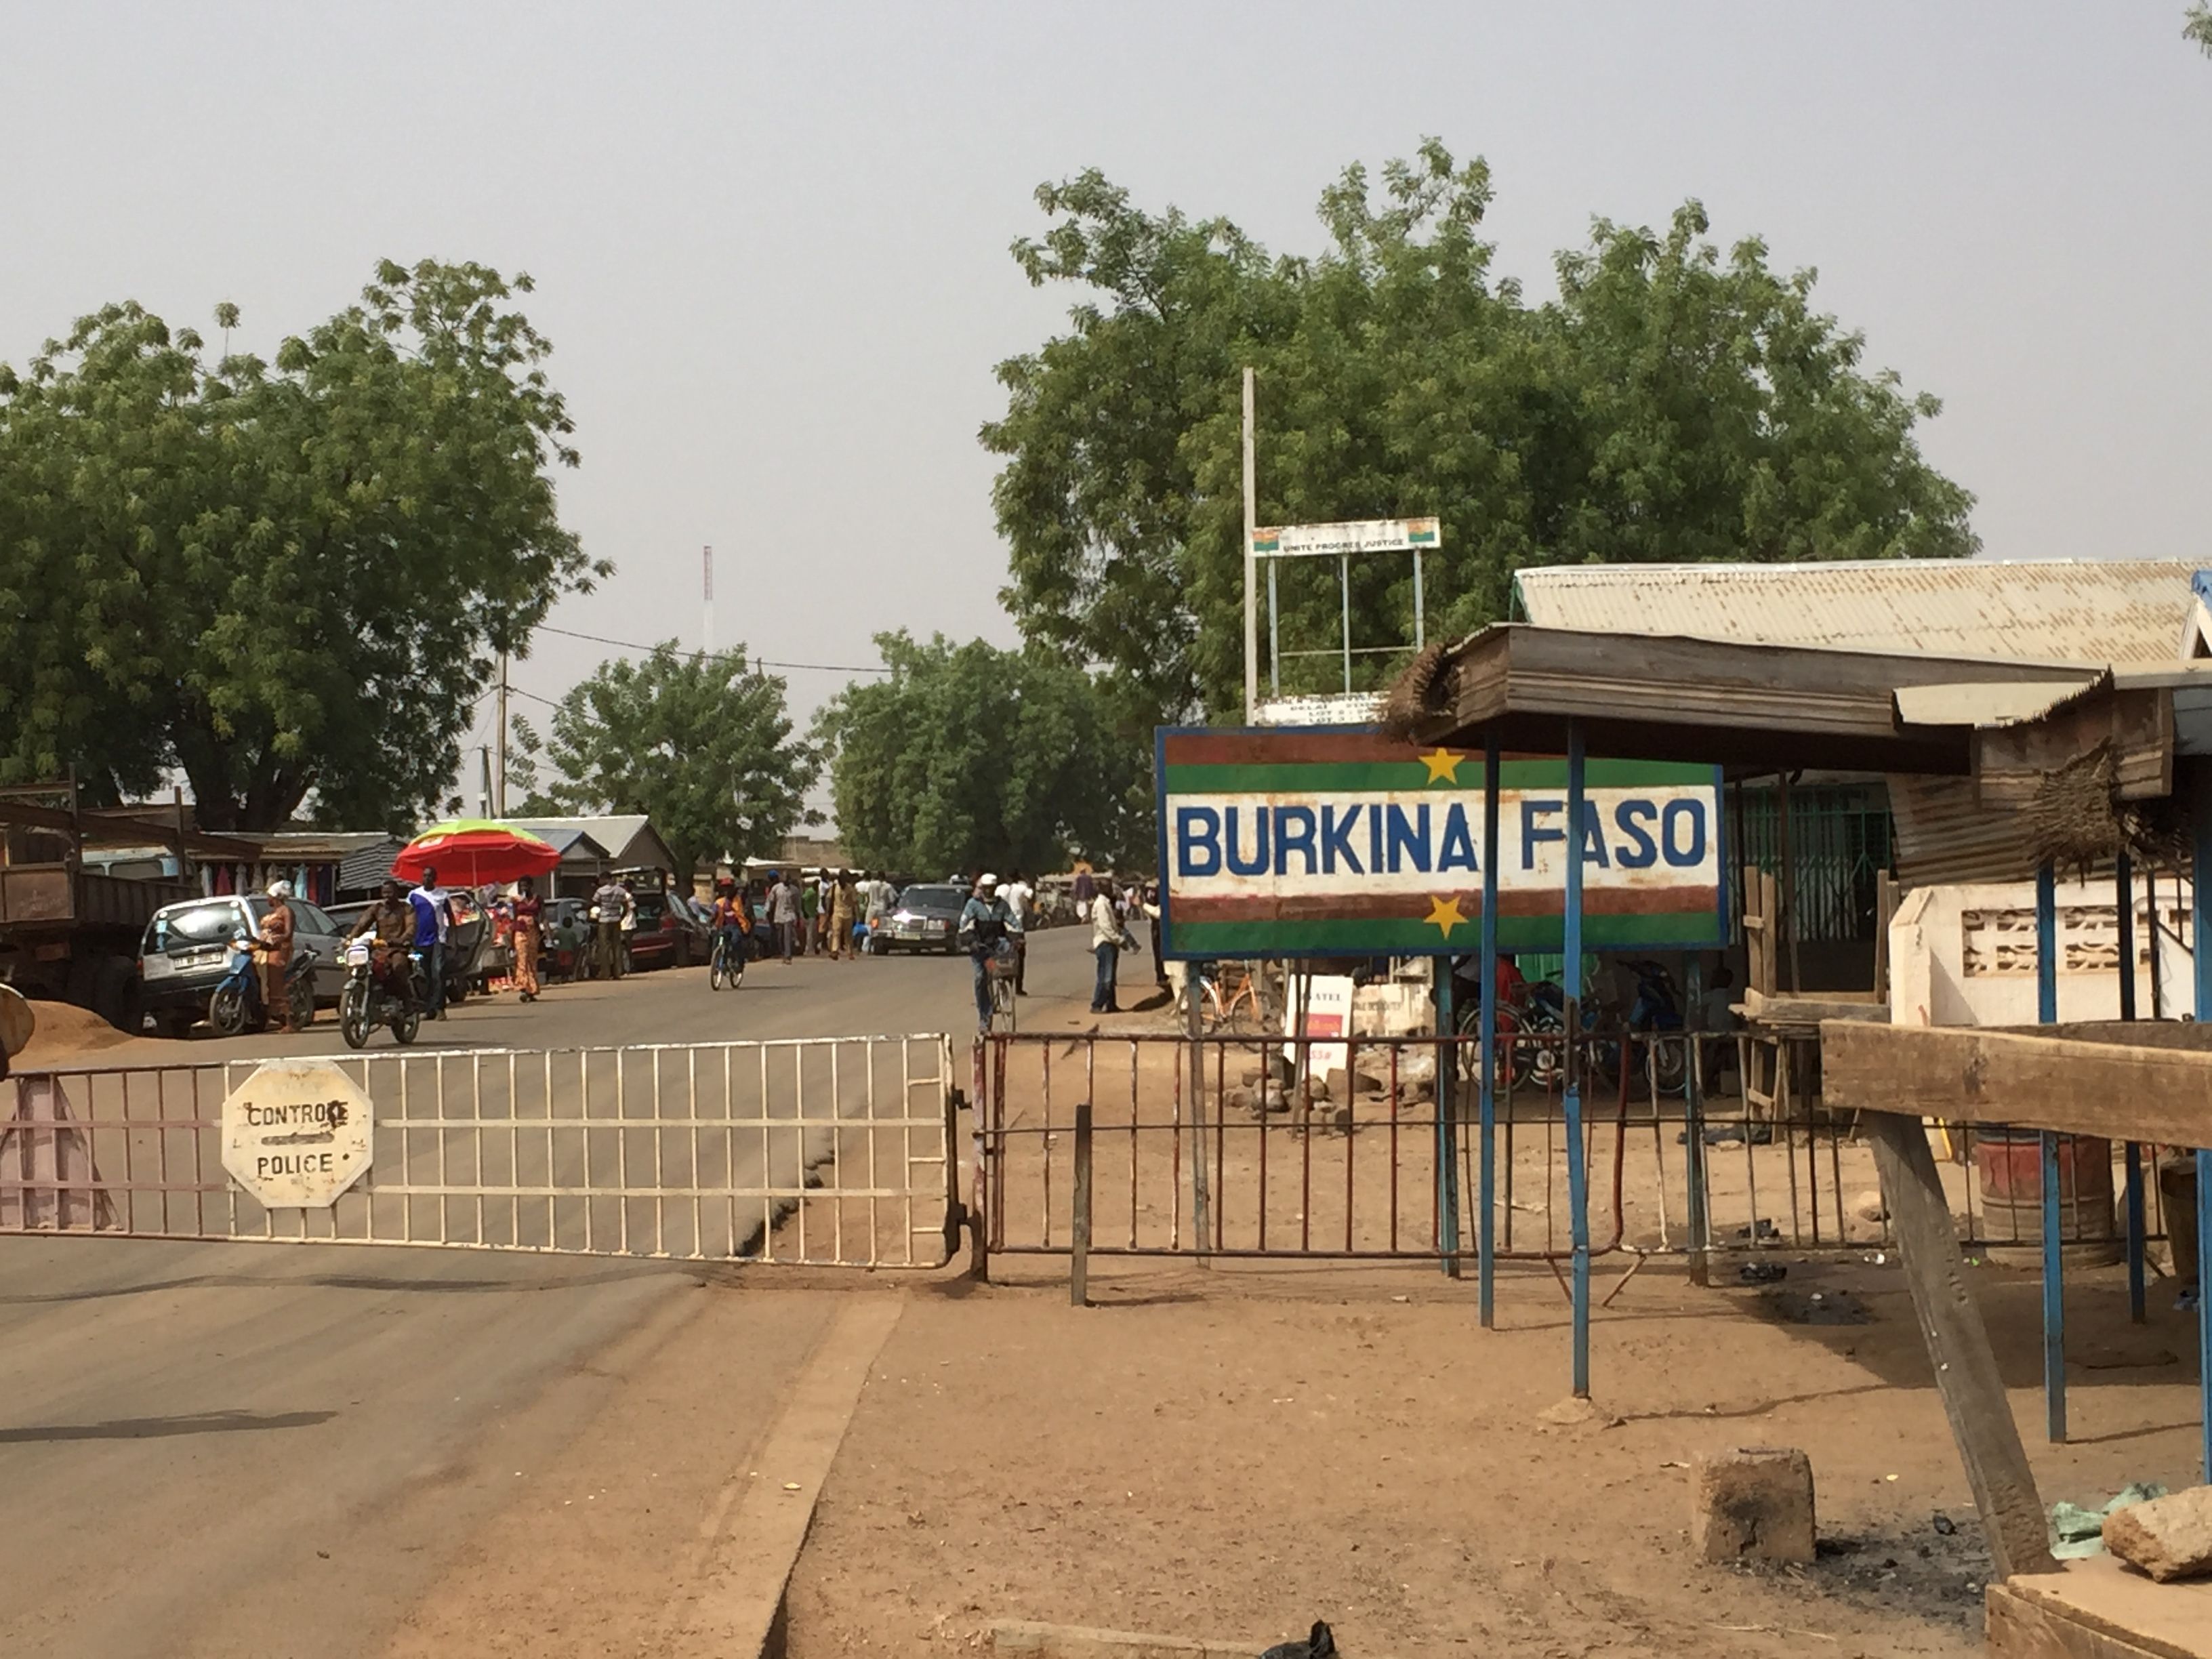 Burkina Faso - Ghana border crossing